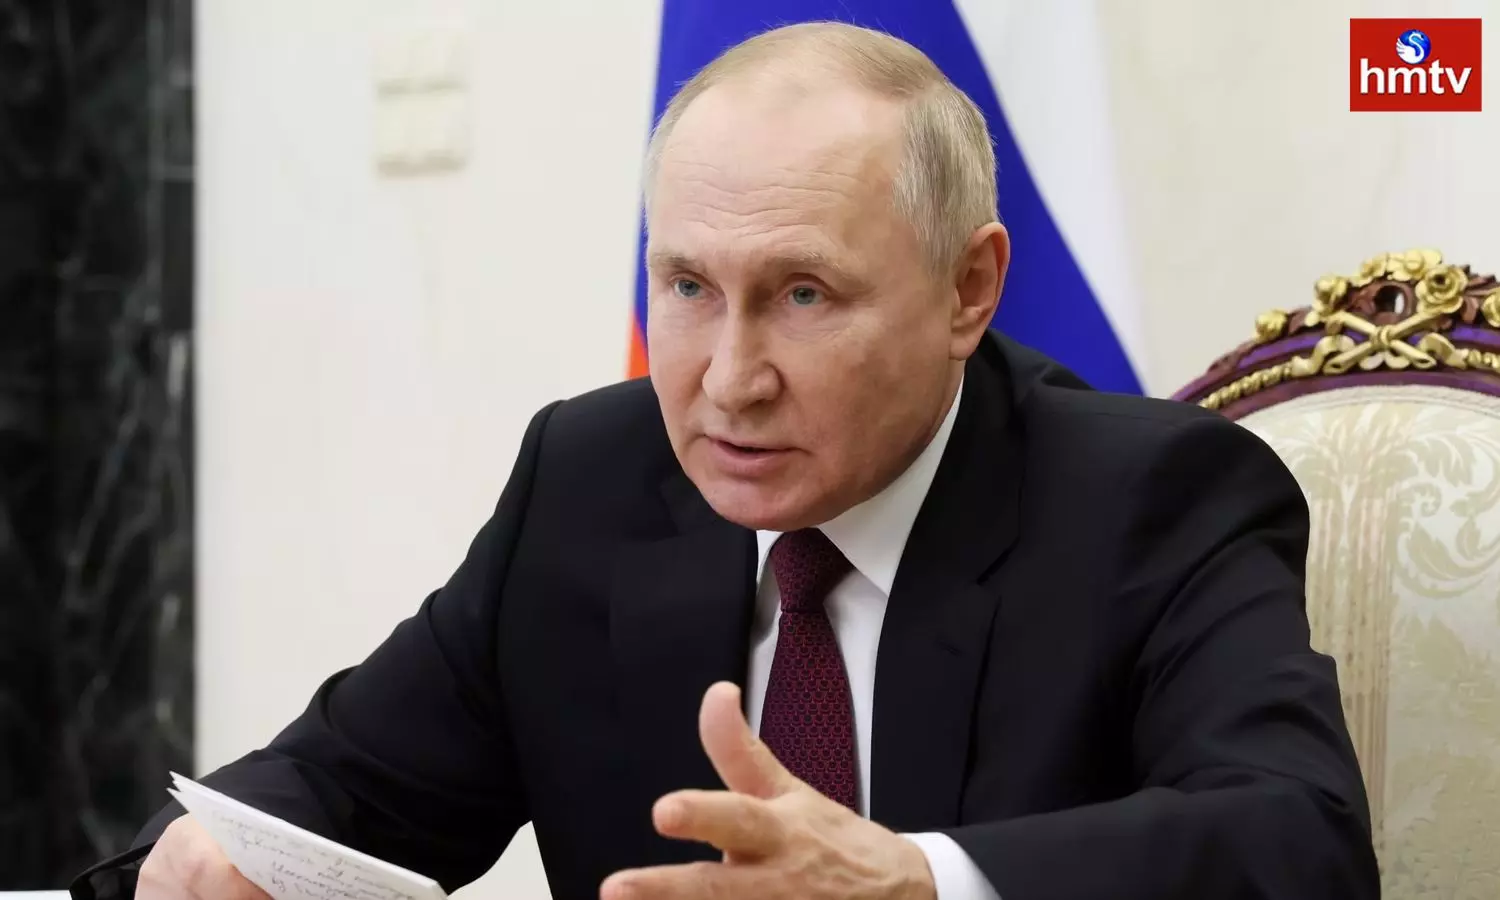 Has Putin Aggression Decreased?